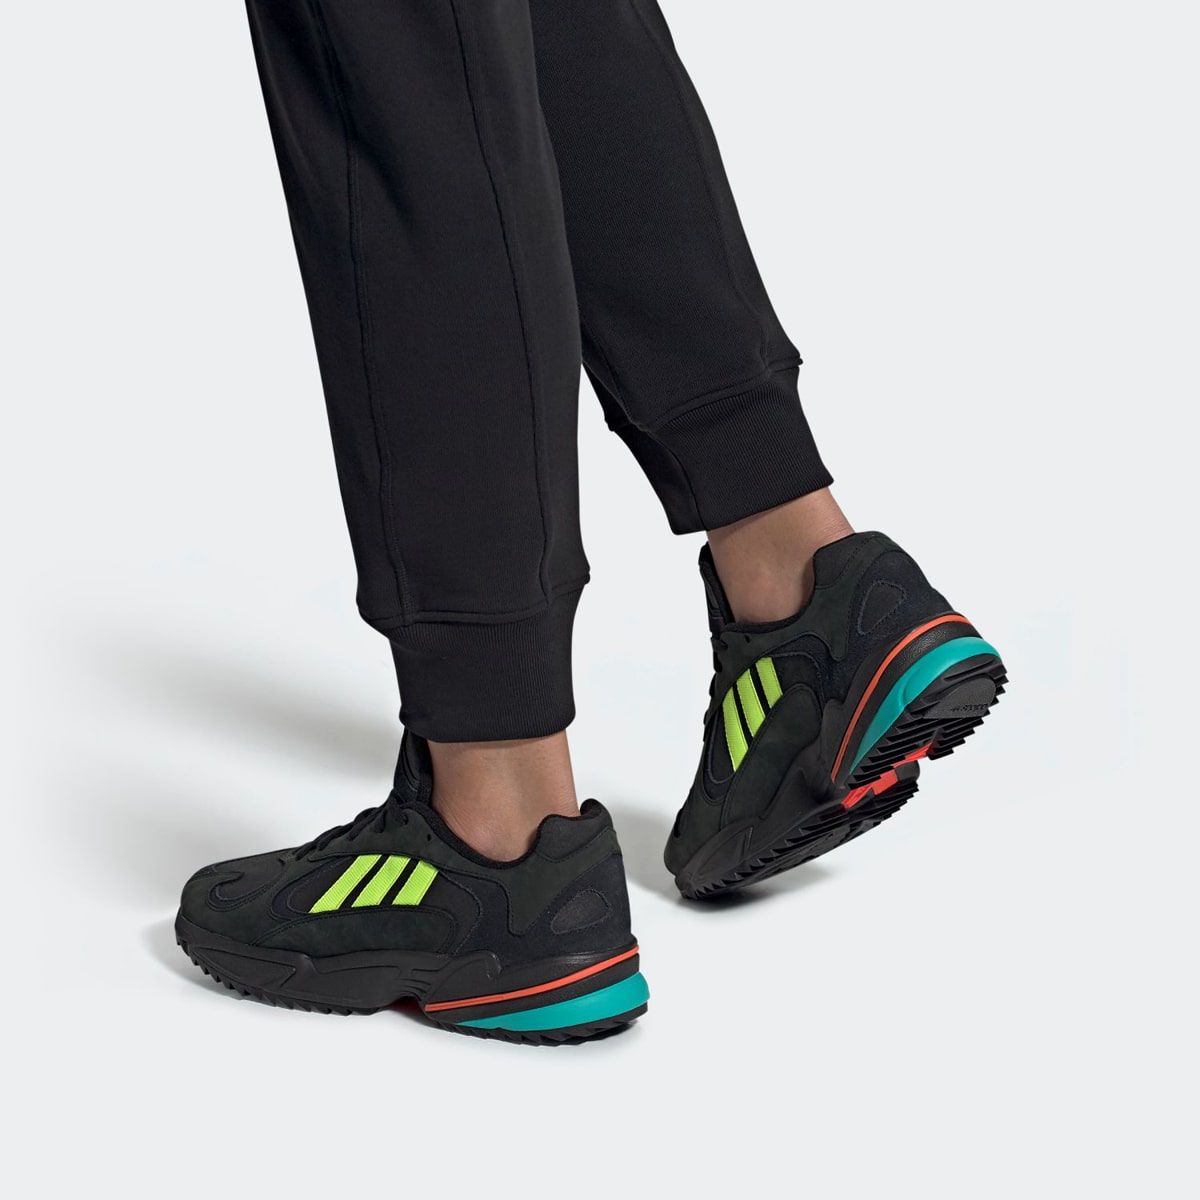 Available Now // The adidas YUNG-1 Trail Takes on a Totally-90s ... كريم مبيض للمناطق الحساسة